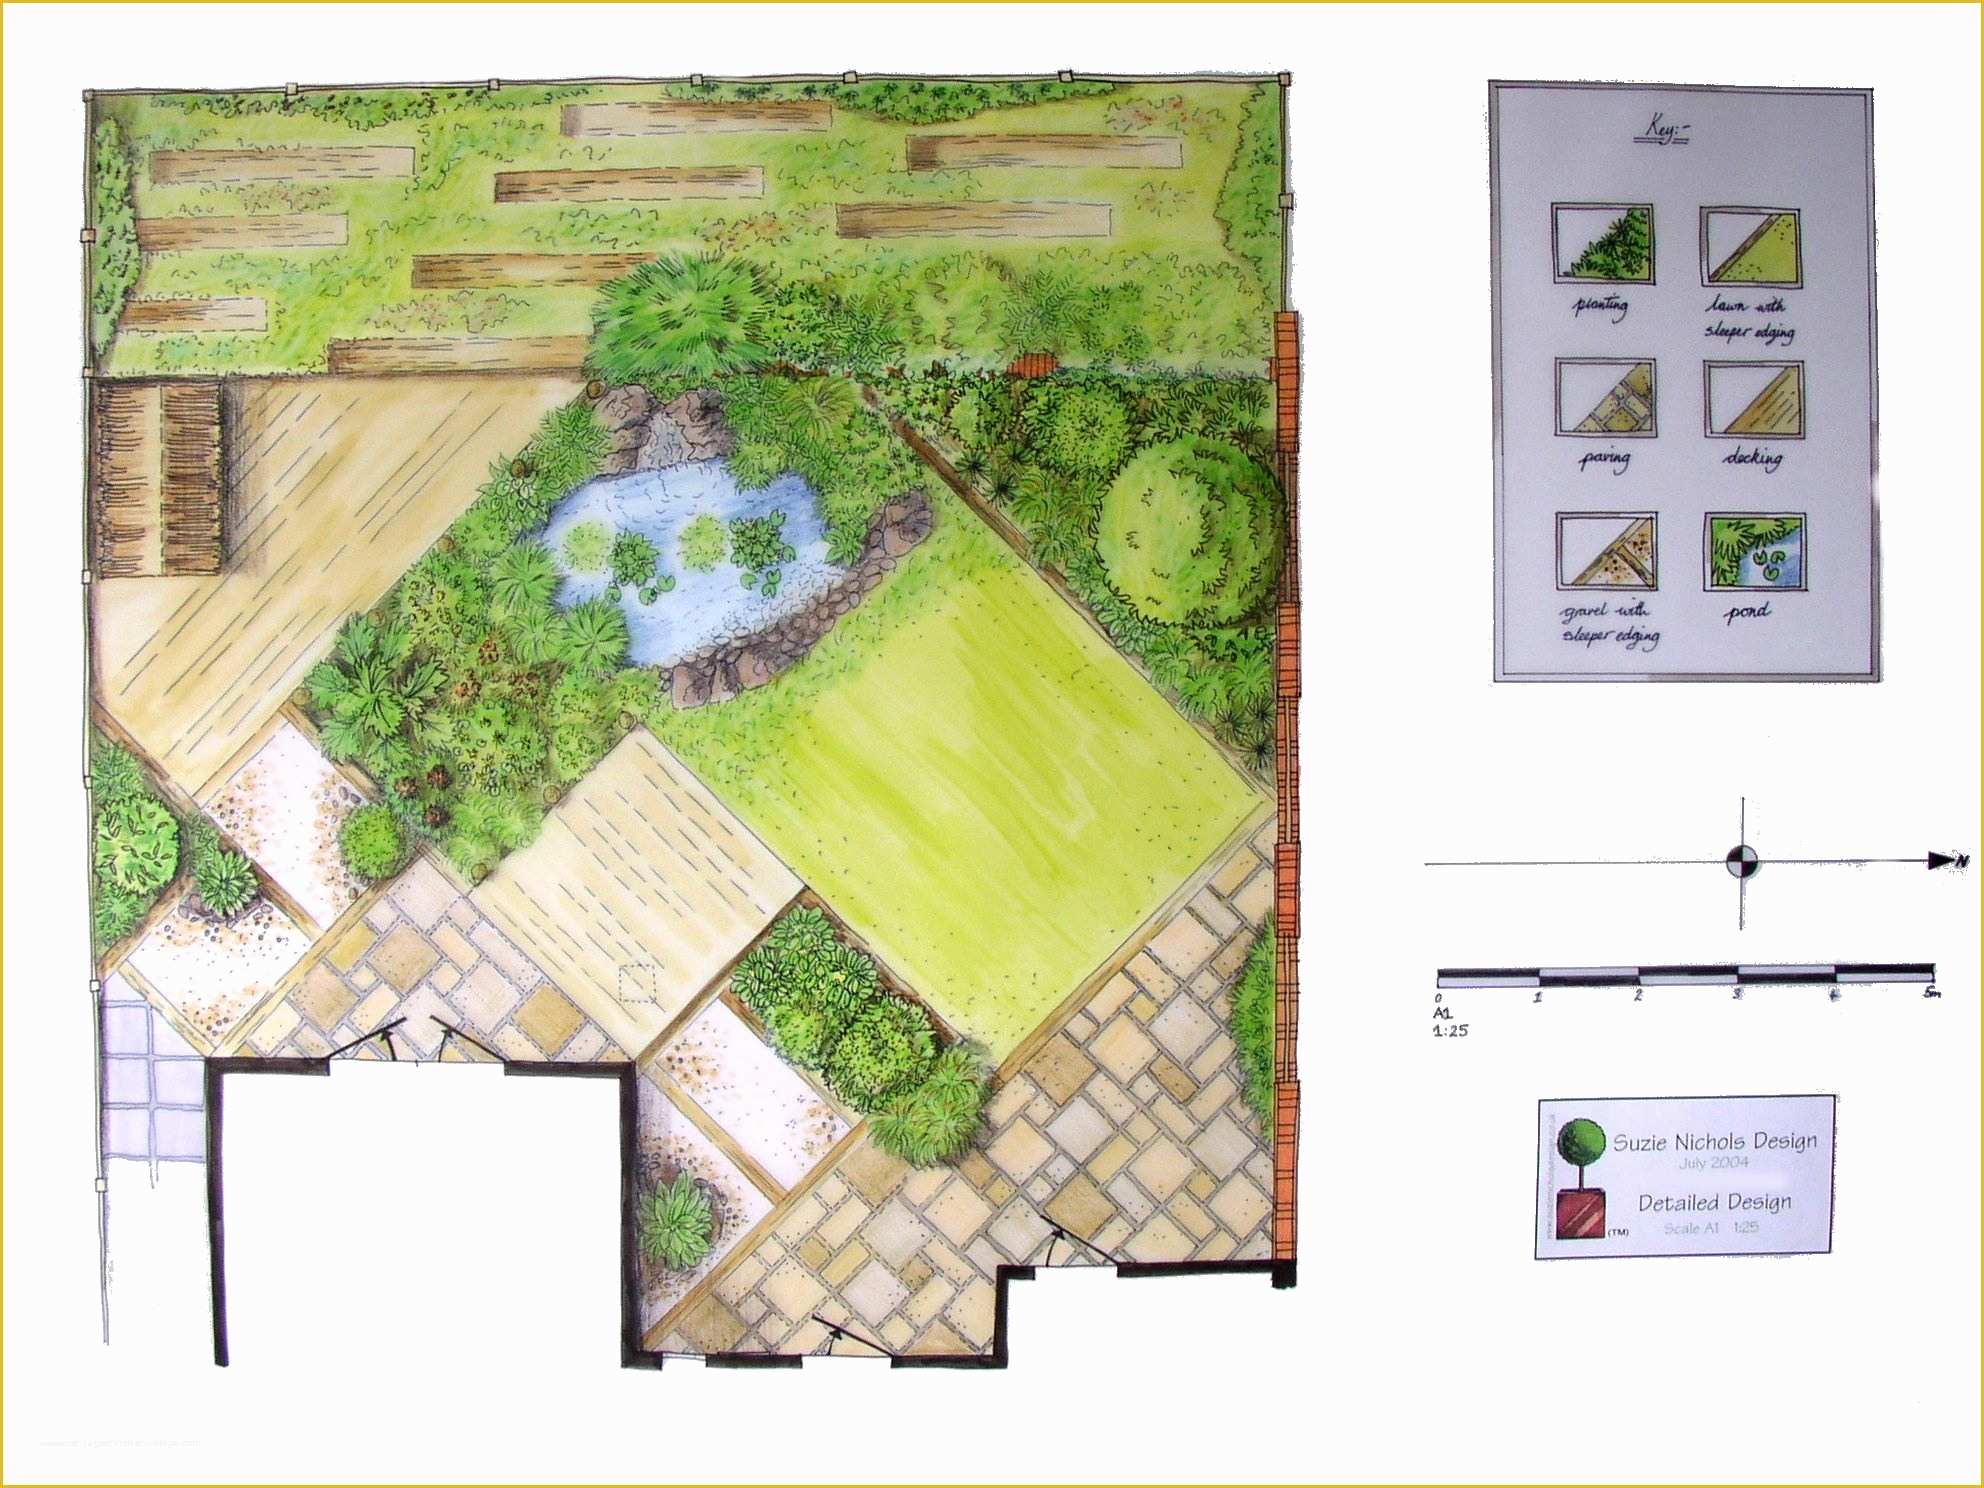 Free Online Landscape Design Templates Of Free Garden Plans Home Design Uk software and Templates